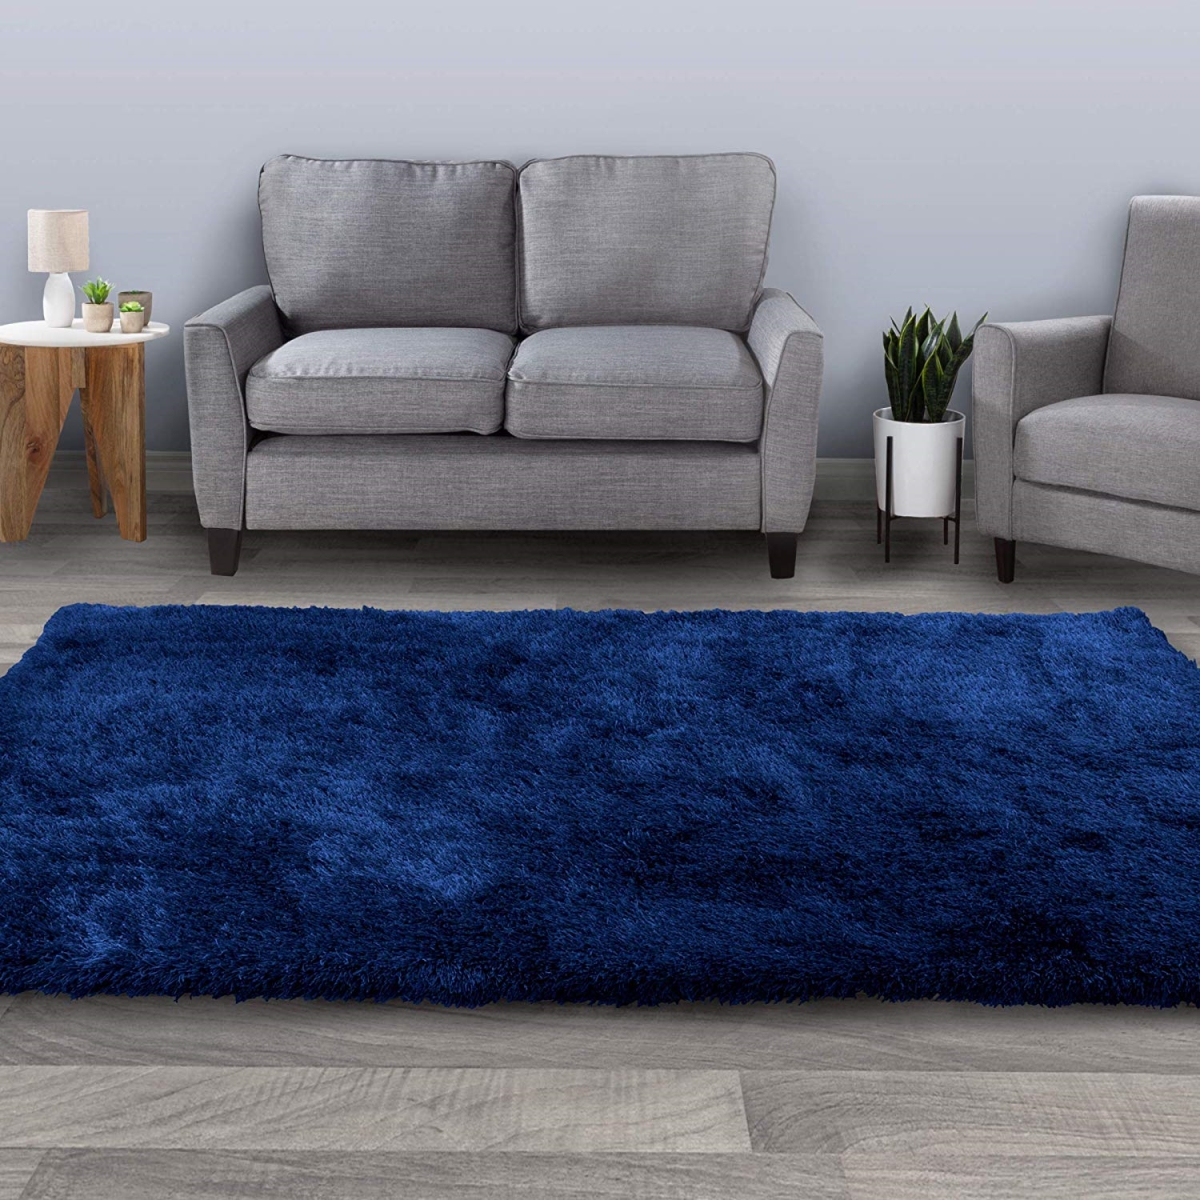 62a-64265 8 X 10 Ft. Shag Area Plush Throw Carpet, Navy Blue